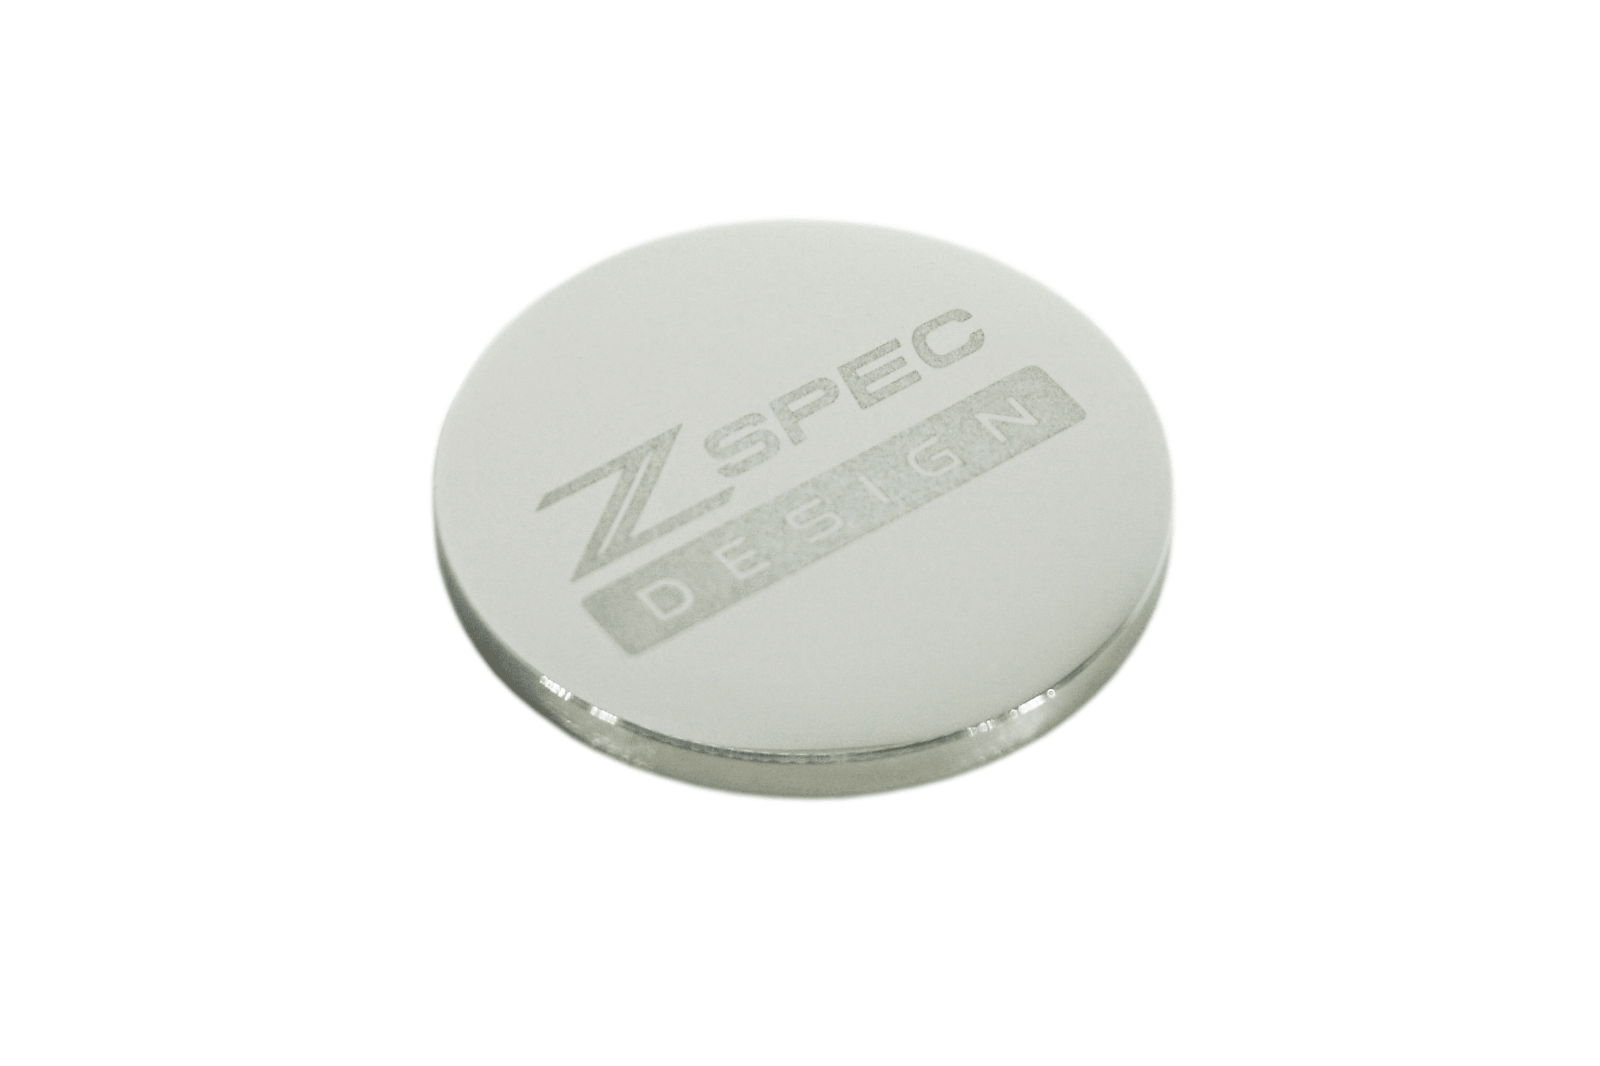 ZSPEC SCENE Shift Knob, M10-1.25, Delrin & Stainless, 5-Speed Shift Pattern Coin Nissan NISMO 300zx